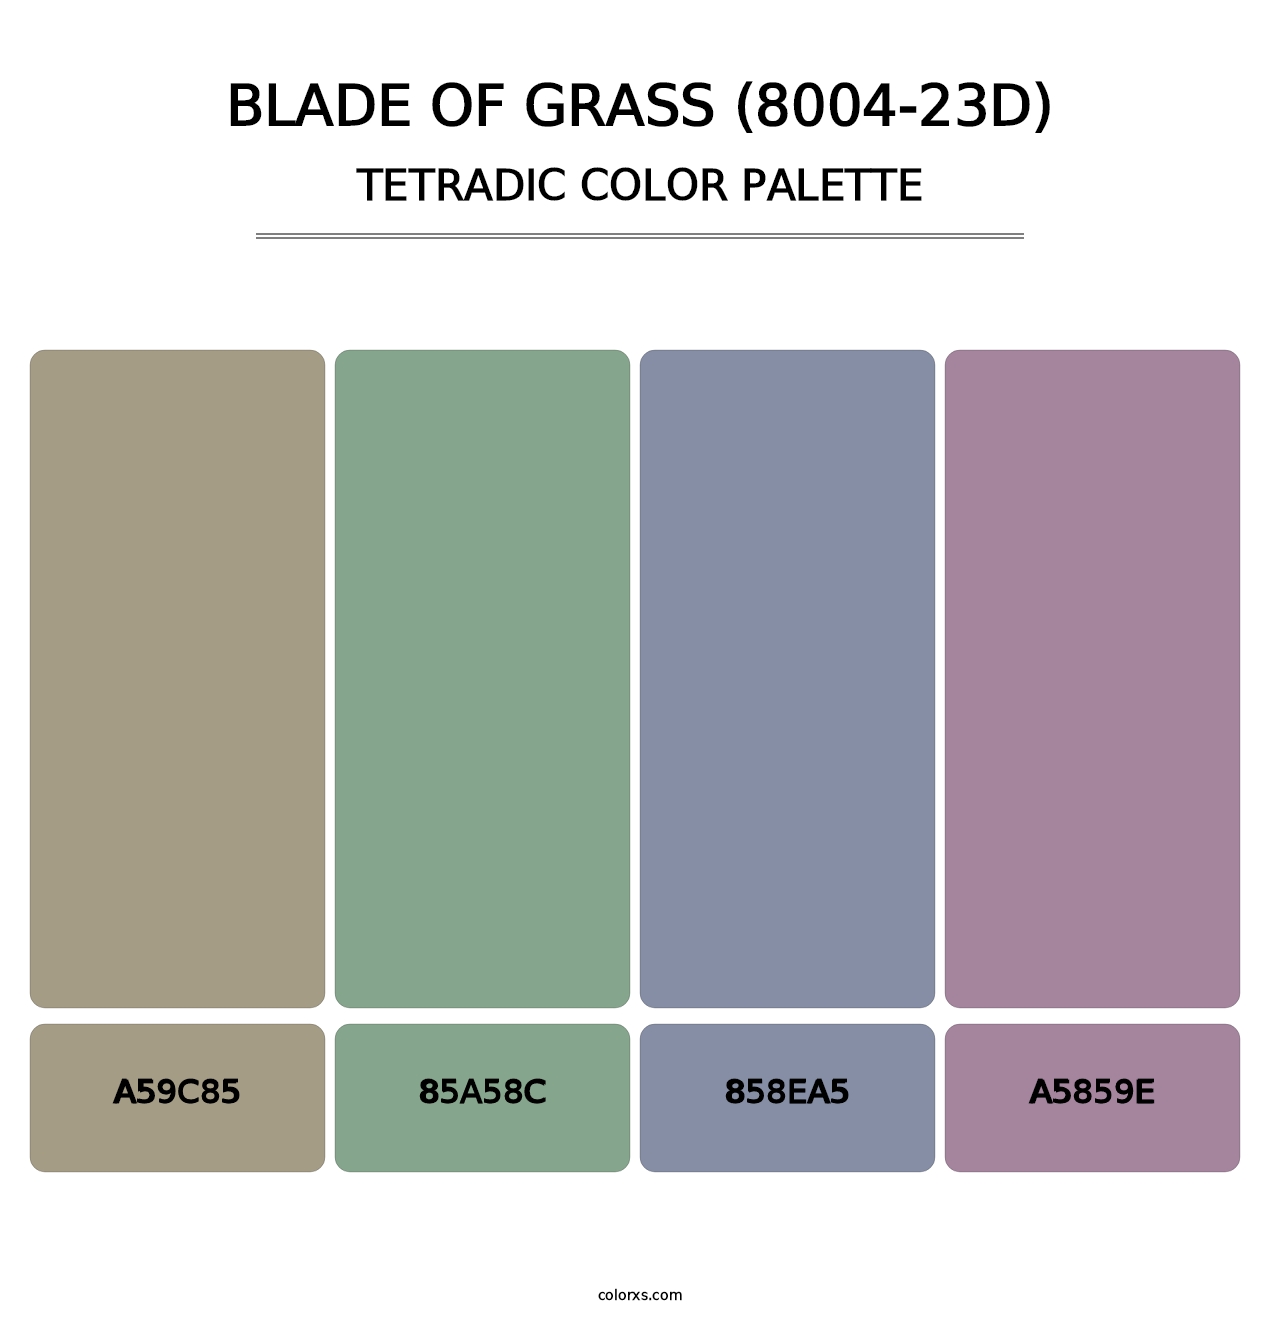 Blade of Grass (8004-23D) - Tetradic Color Palette